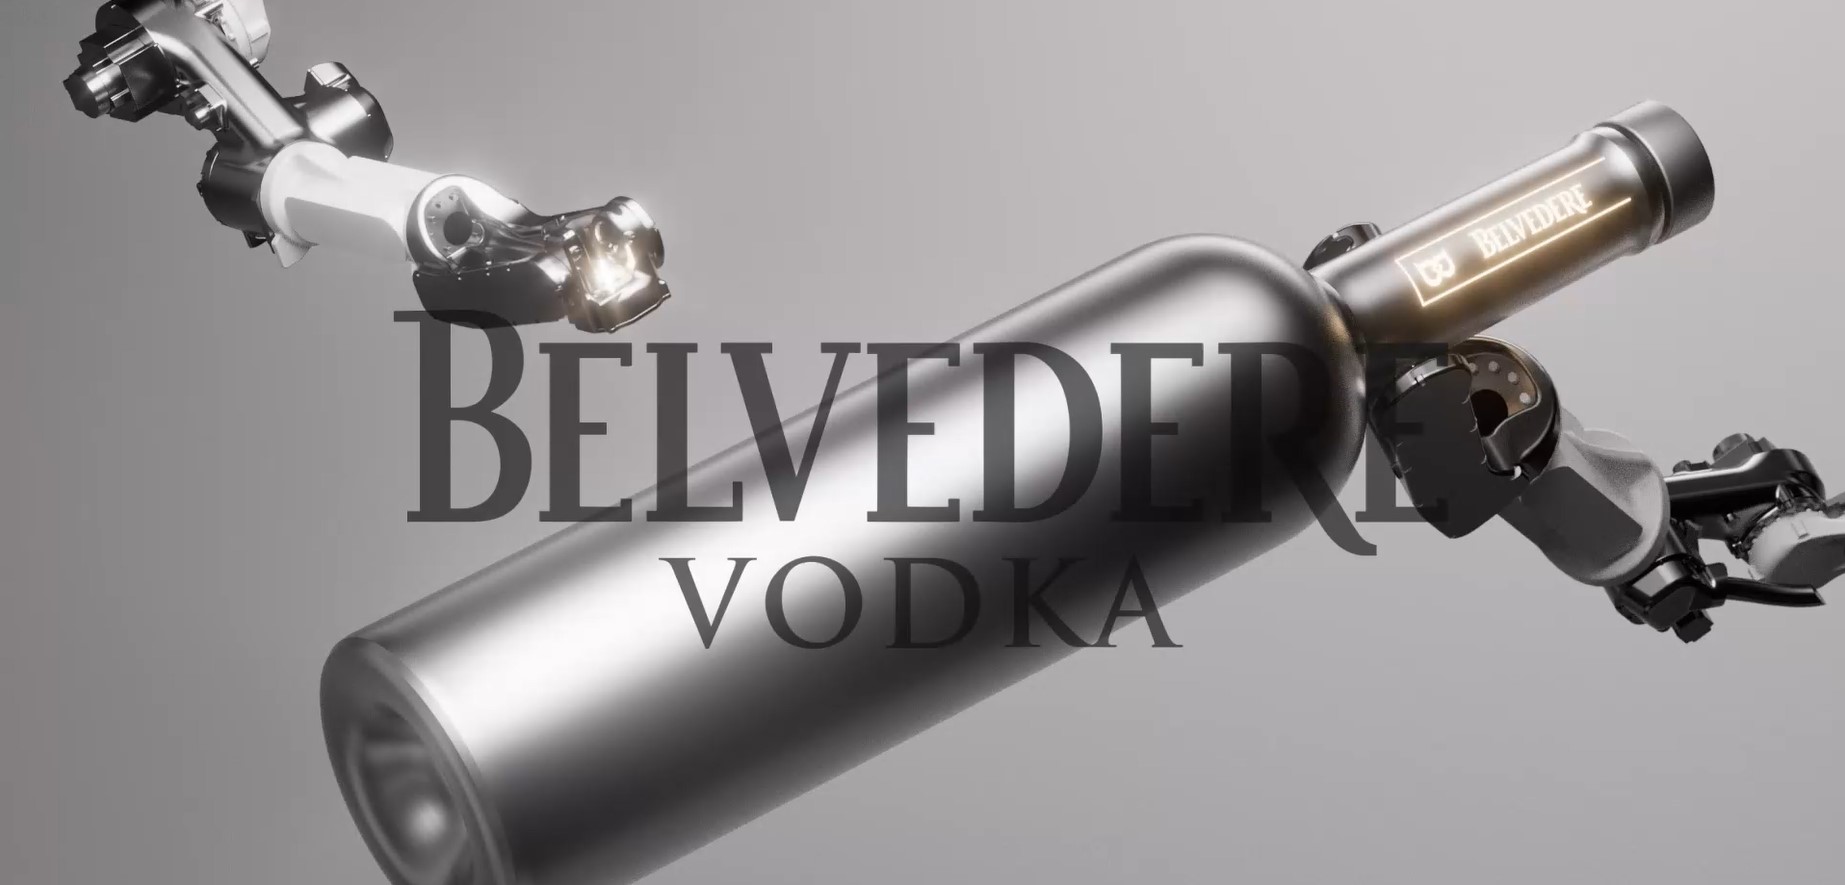 Personalised Belvedere Vodka Pure 700ml ILLUMINATED LUMINOUS - The